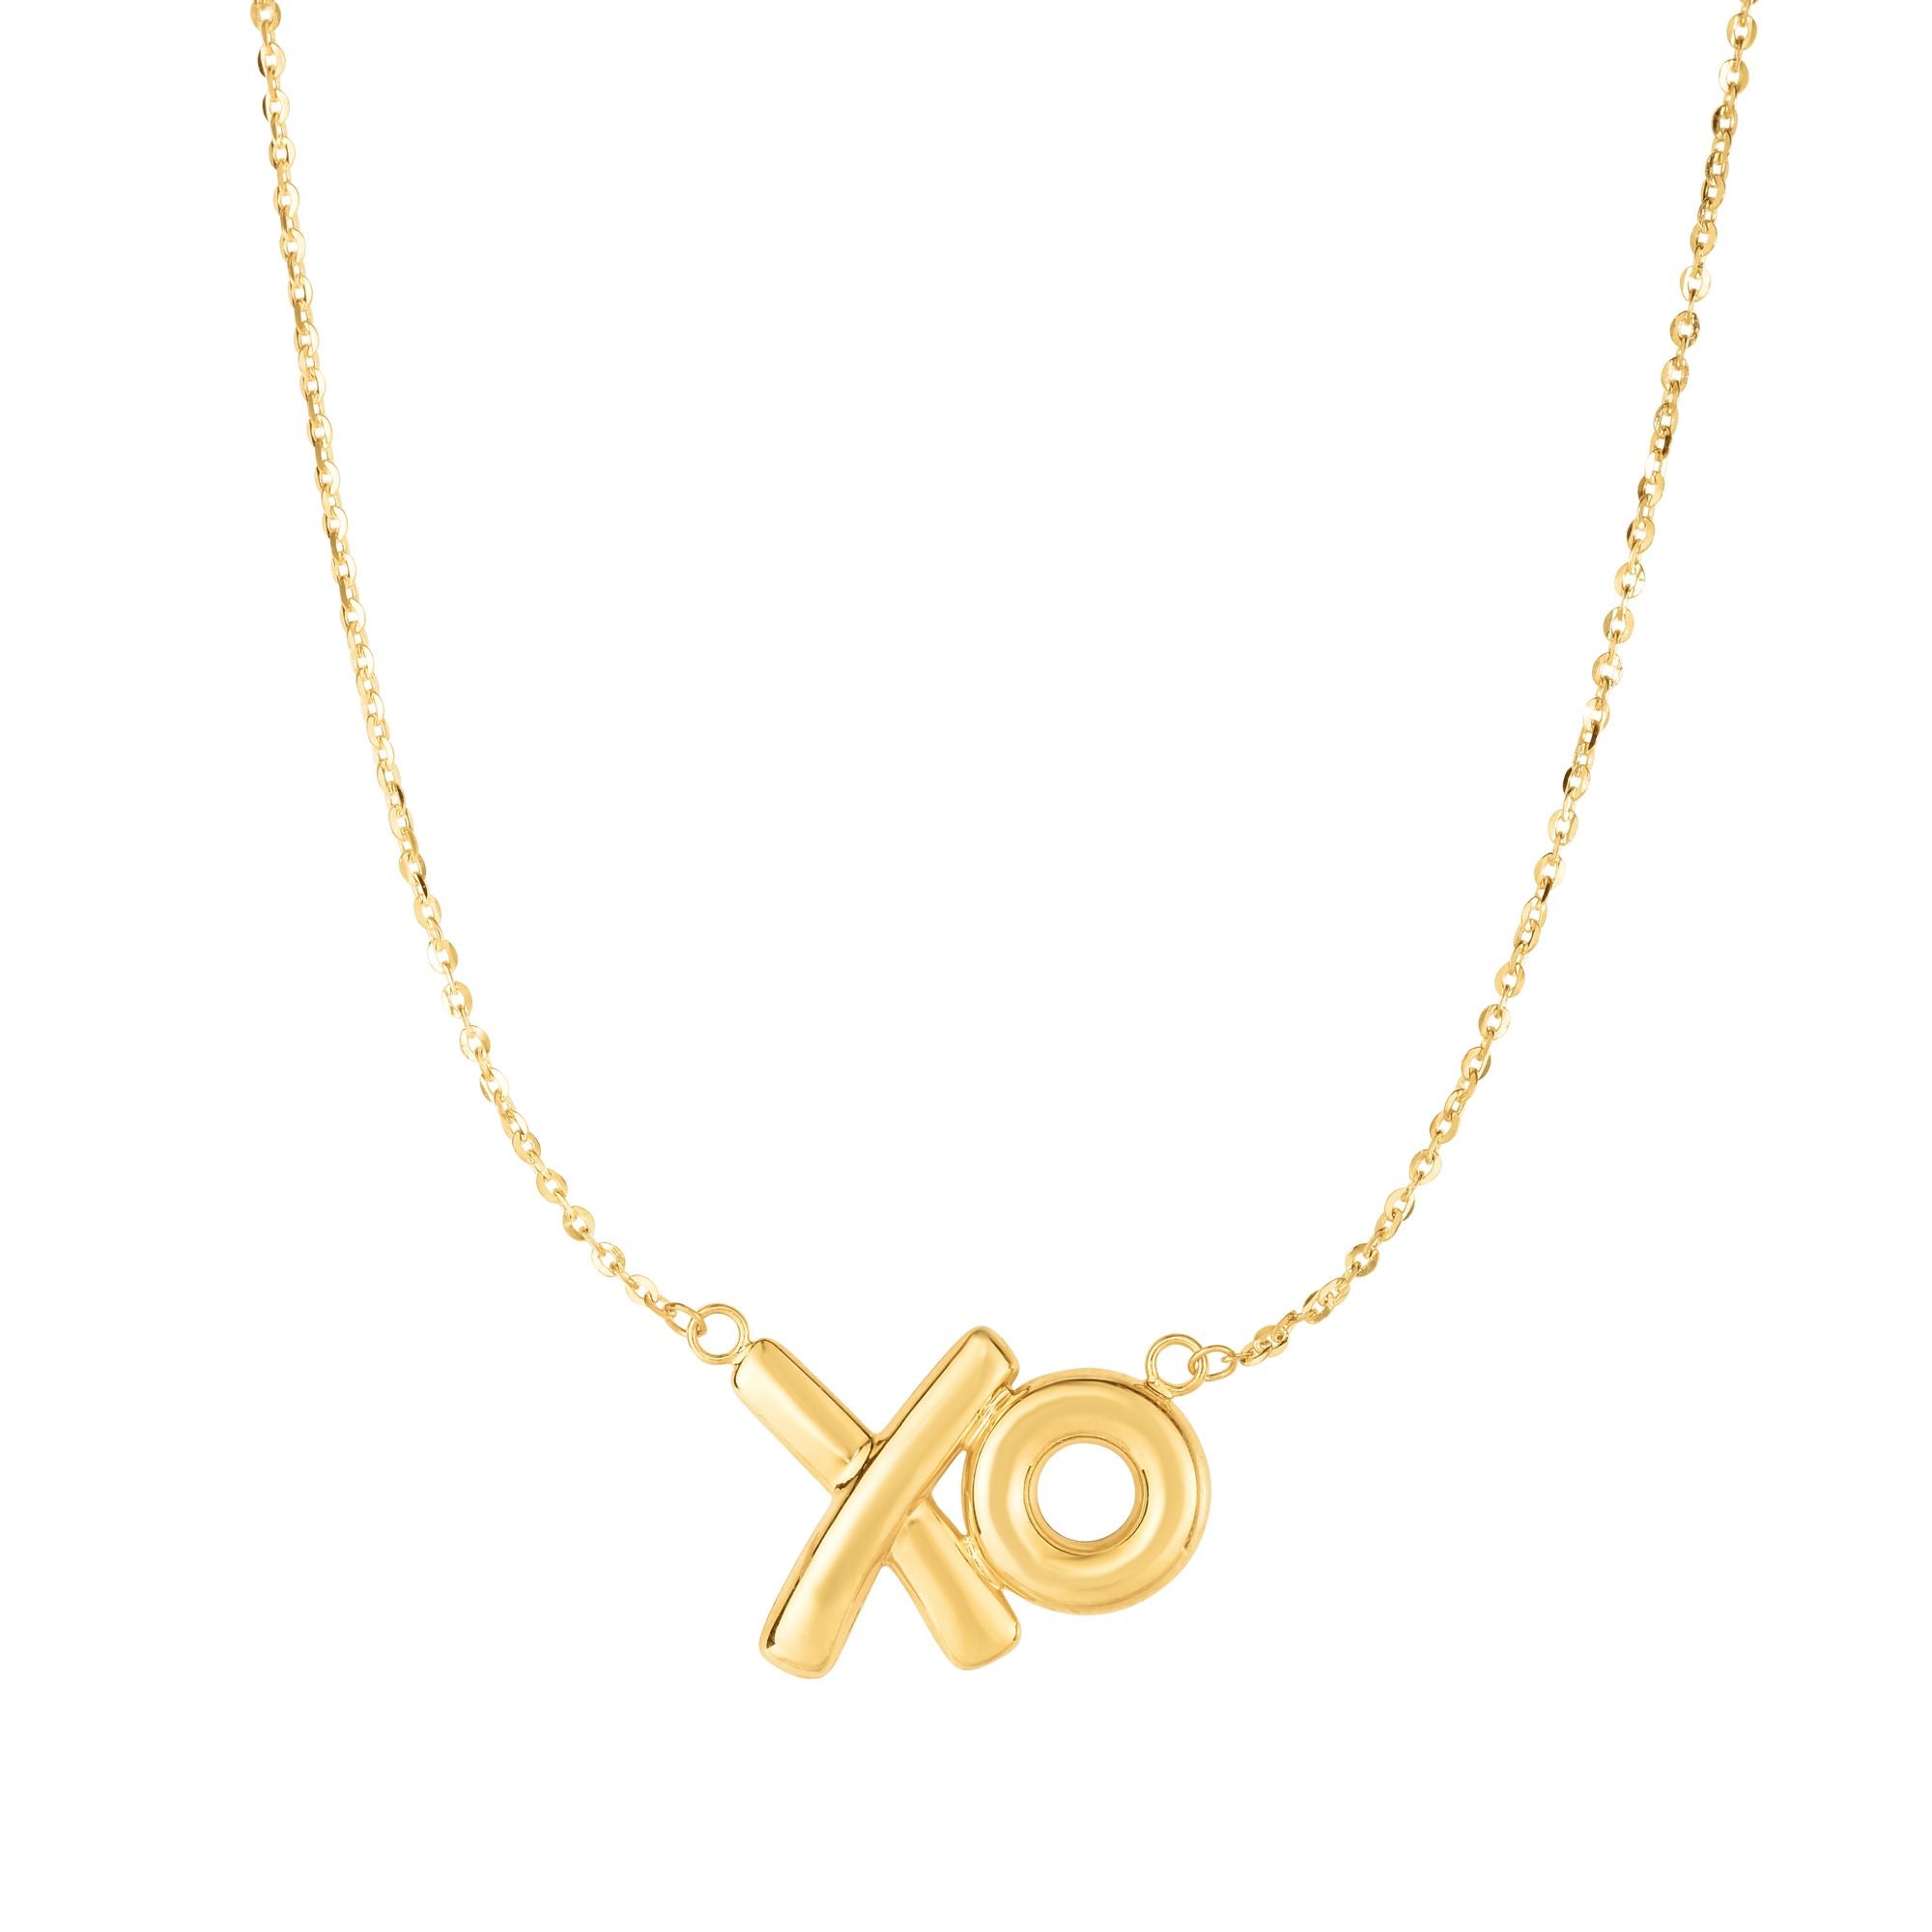 Gold 3 Piece X and O Style Necklace Jewelry Set Rhinestone Statement Chain  XOXO | eBay